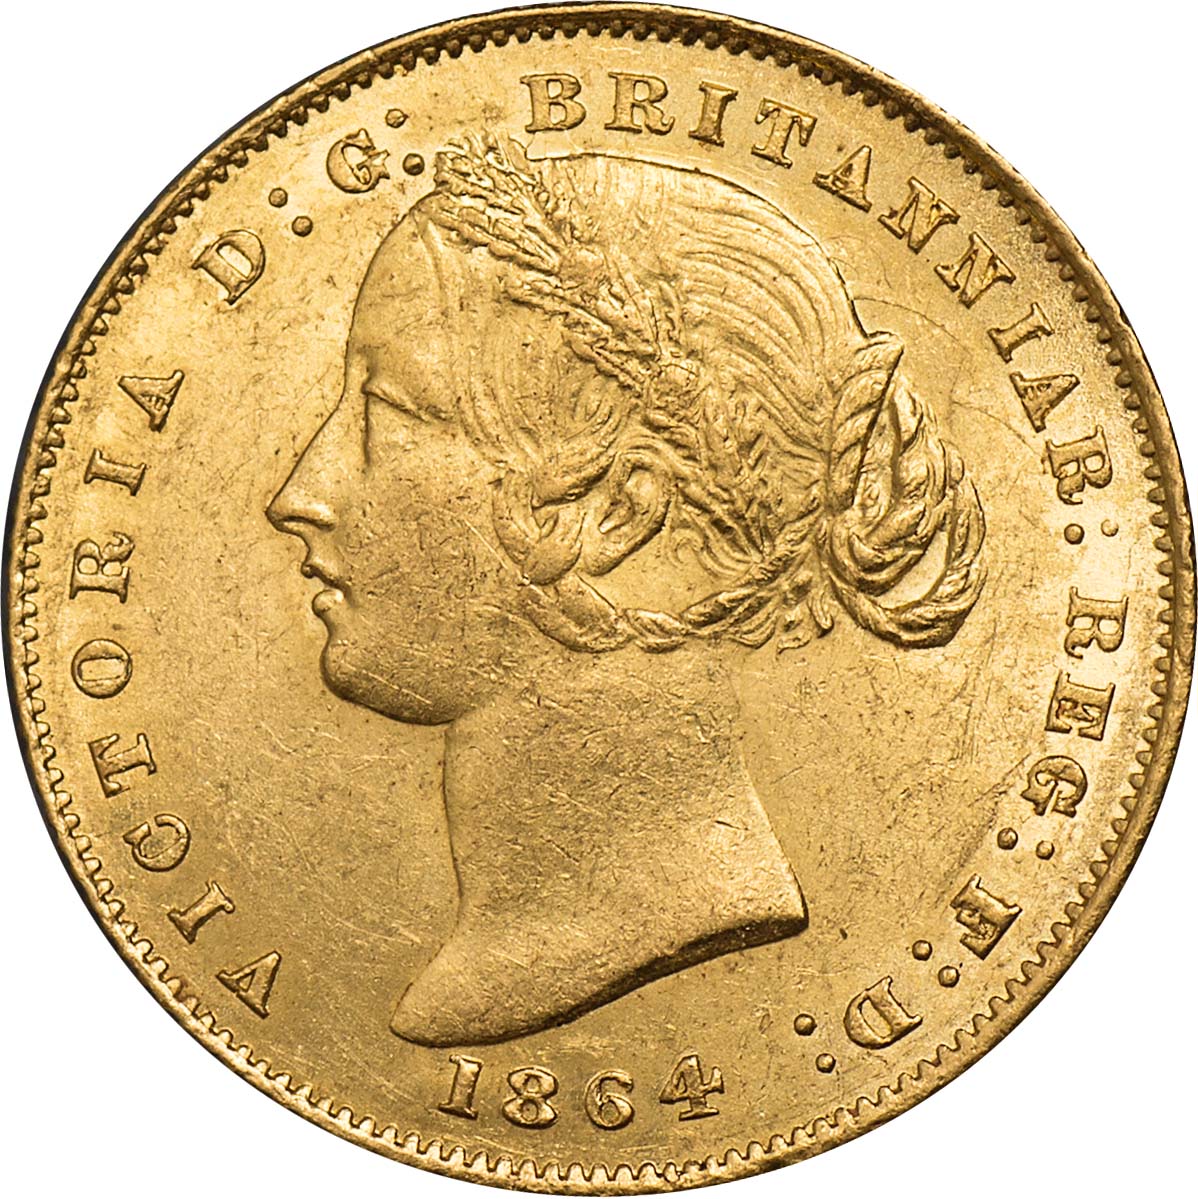 G  Australia, Victoria, sovereign, 1864, Sydney mint, laur. head l., rev. AUSTRALIA within wreath,